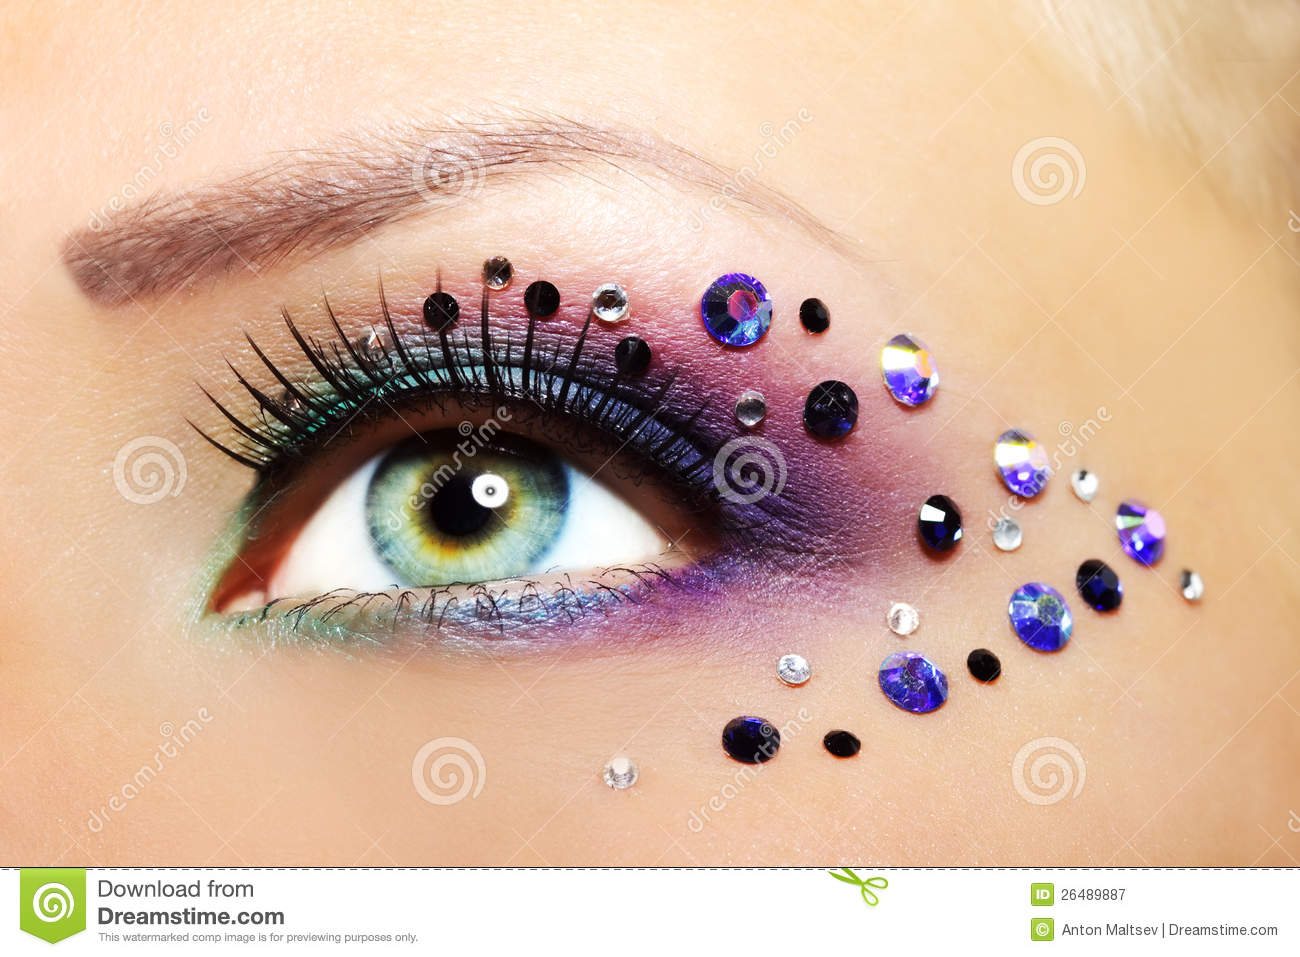 Eyes Makeup Pics Download Beautiful Eye Makeup Stock Image Image Of Glamour Creative 26489887